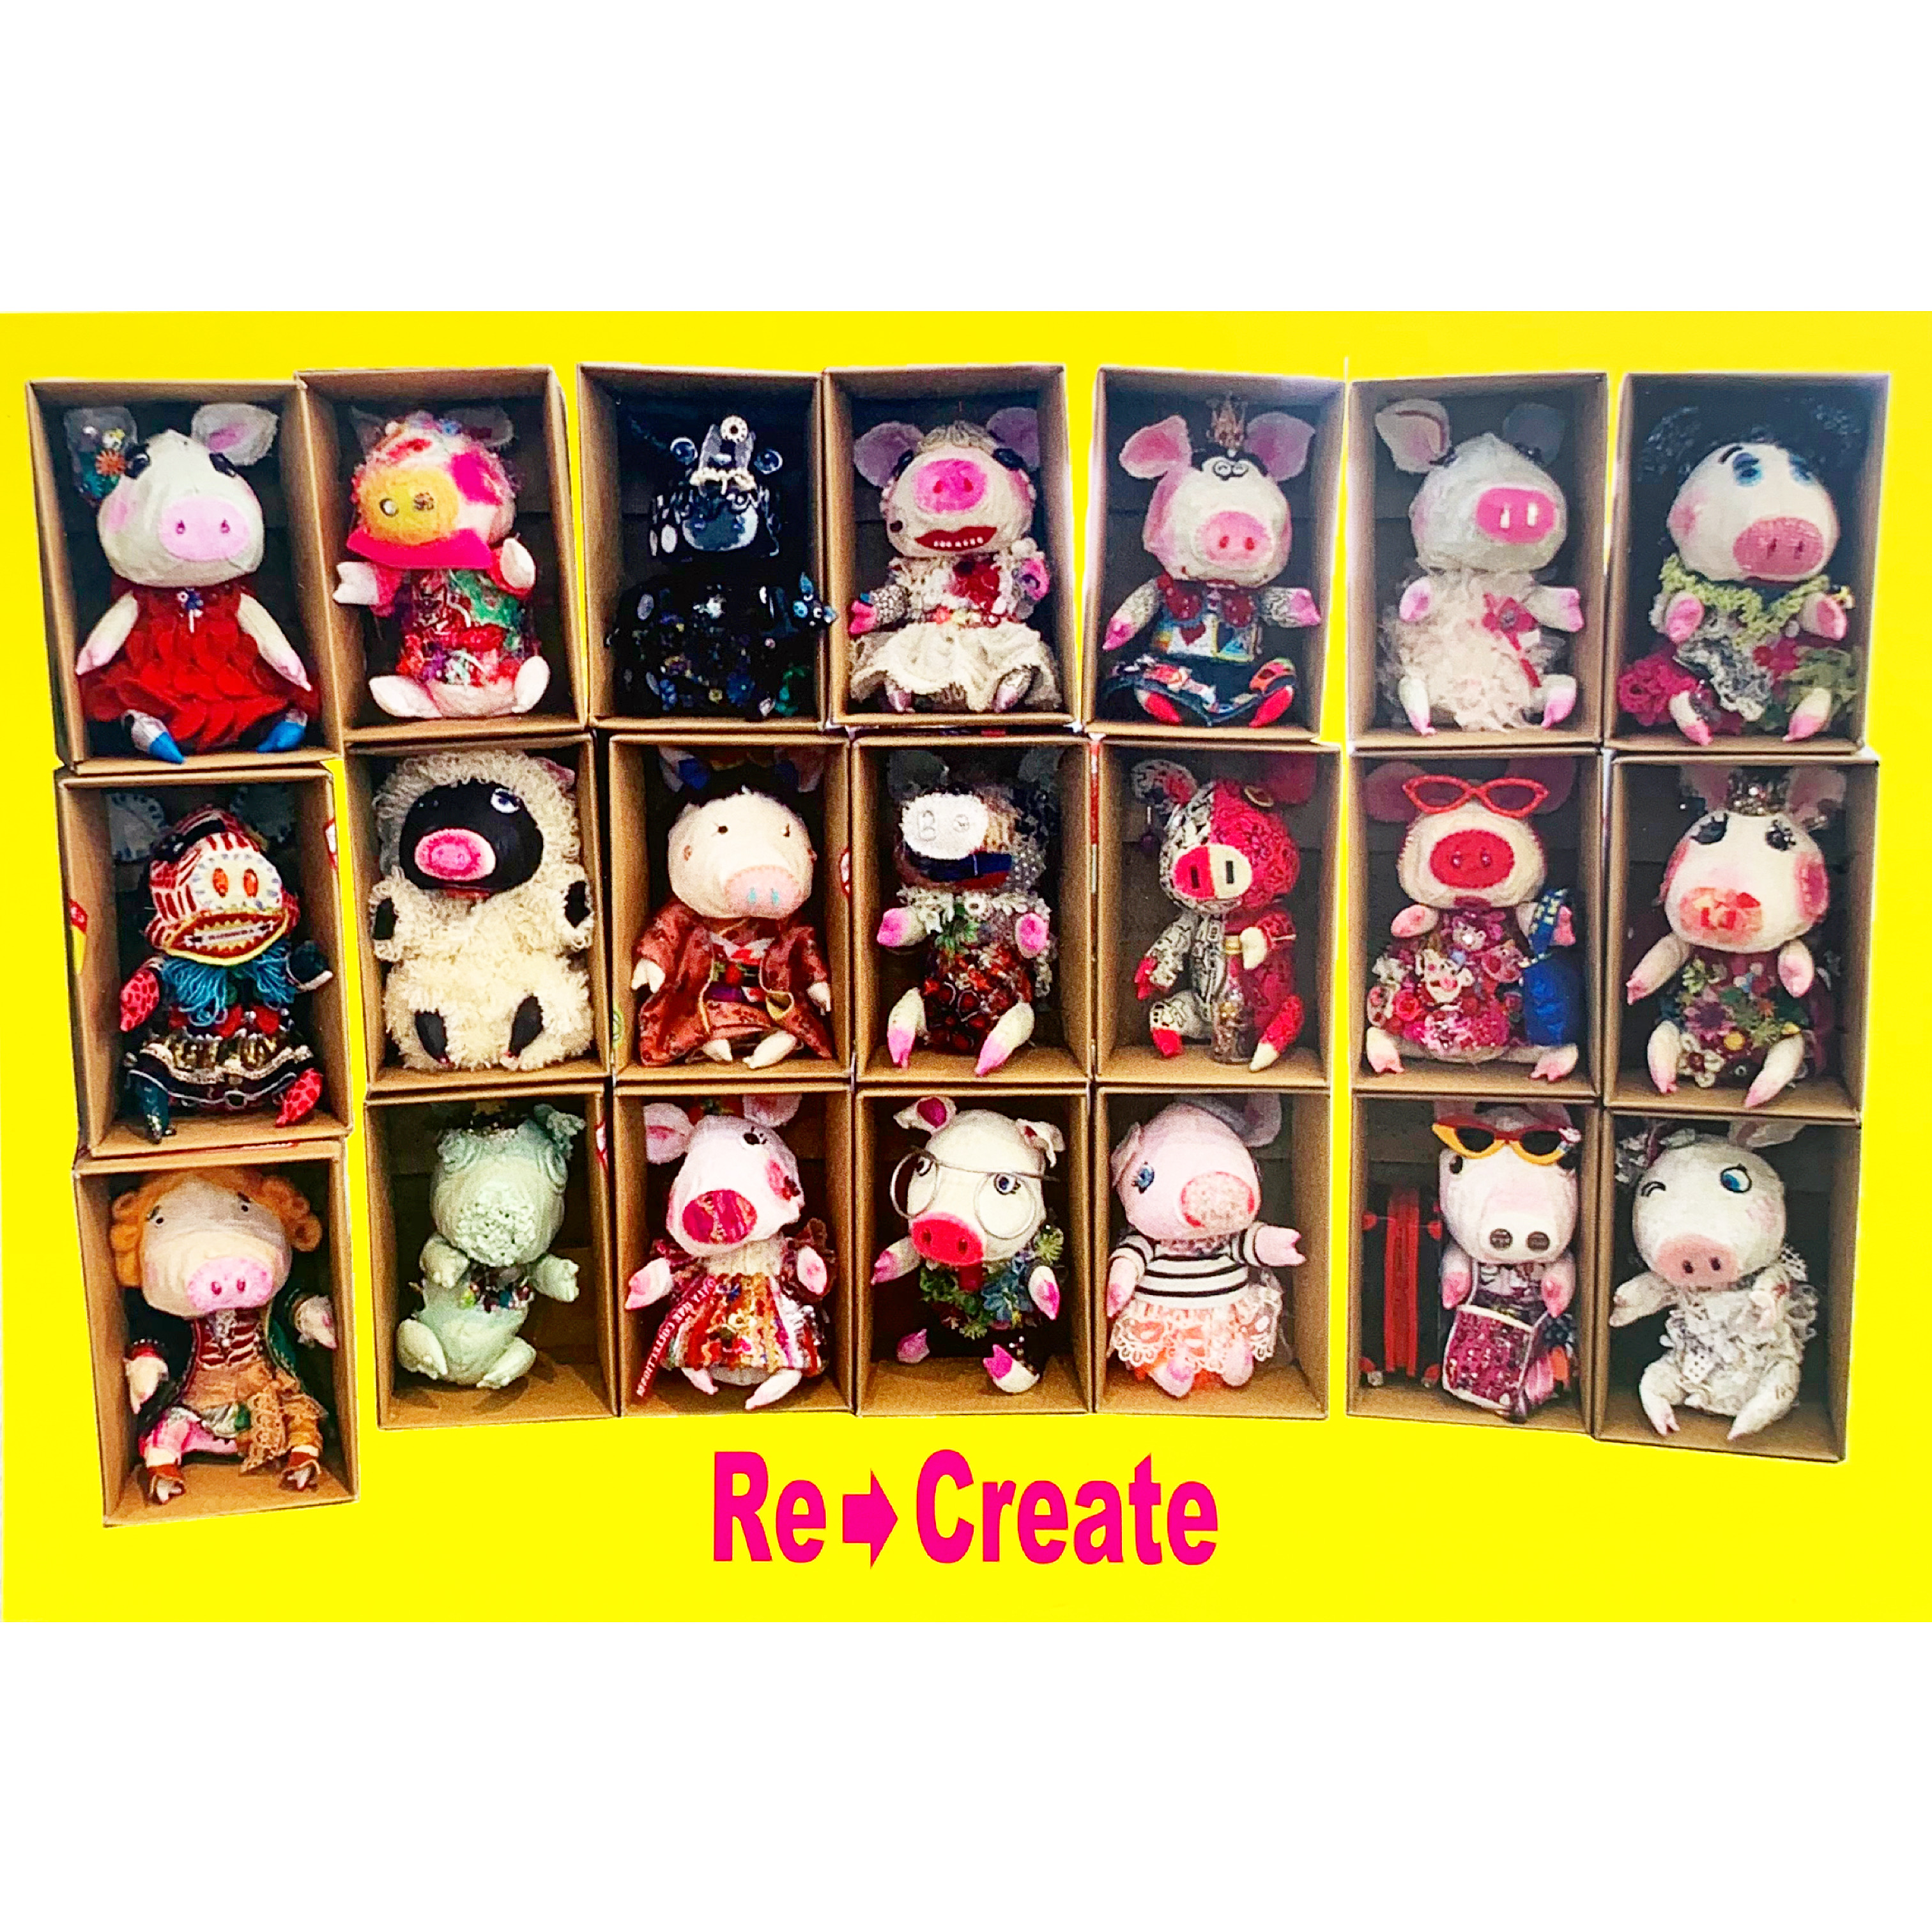 Re→Create 2020 6.6 Start !!